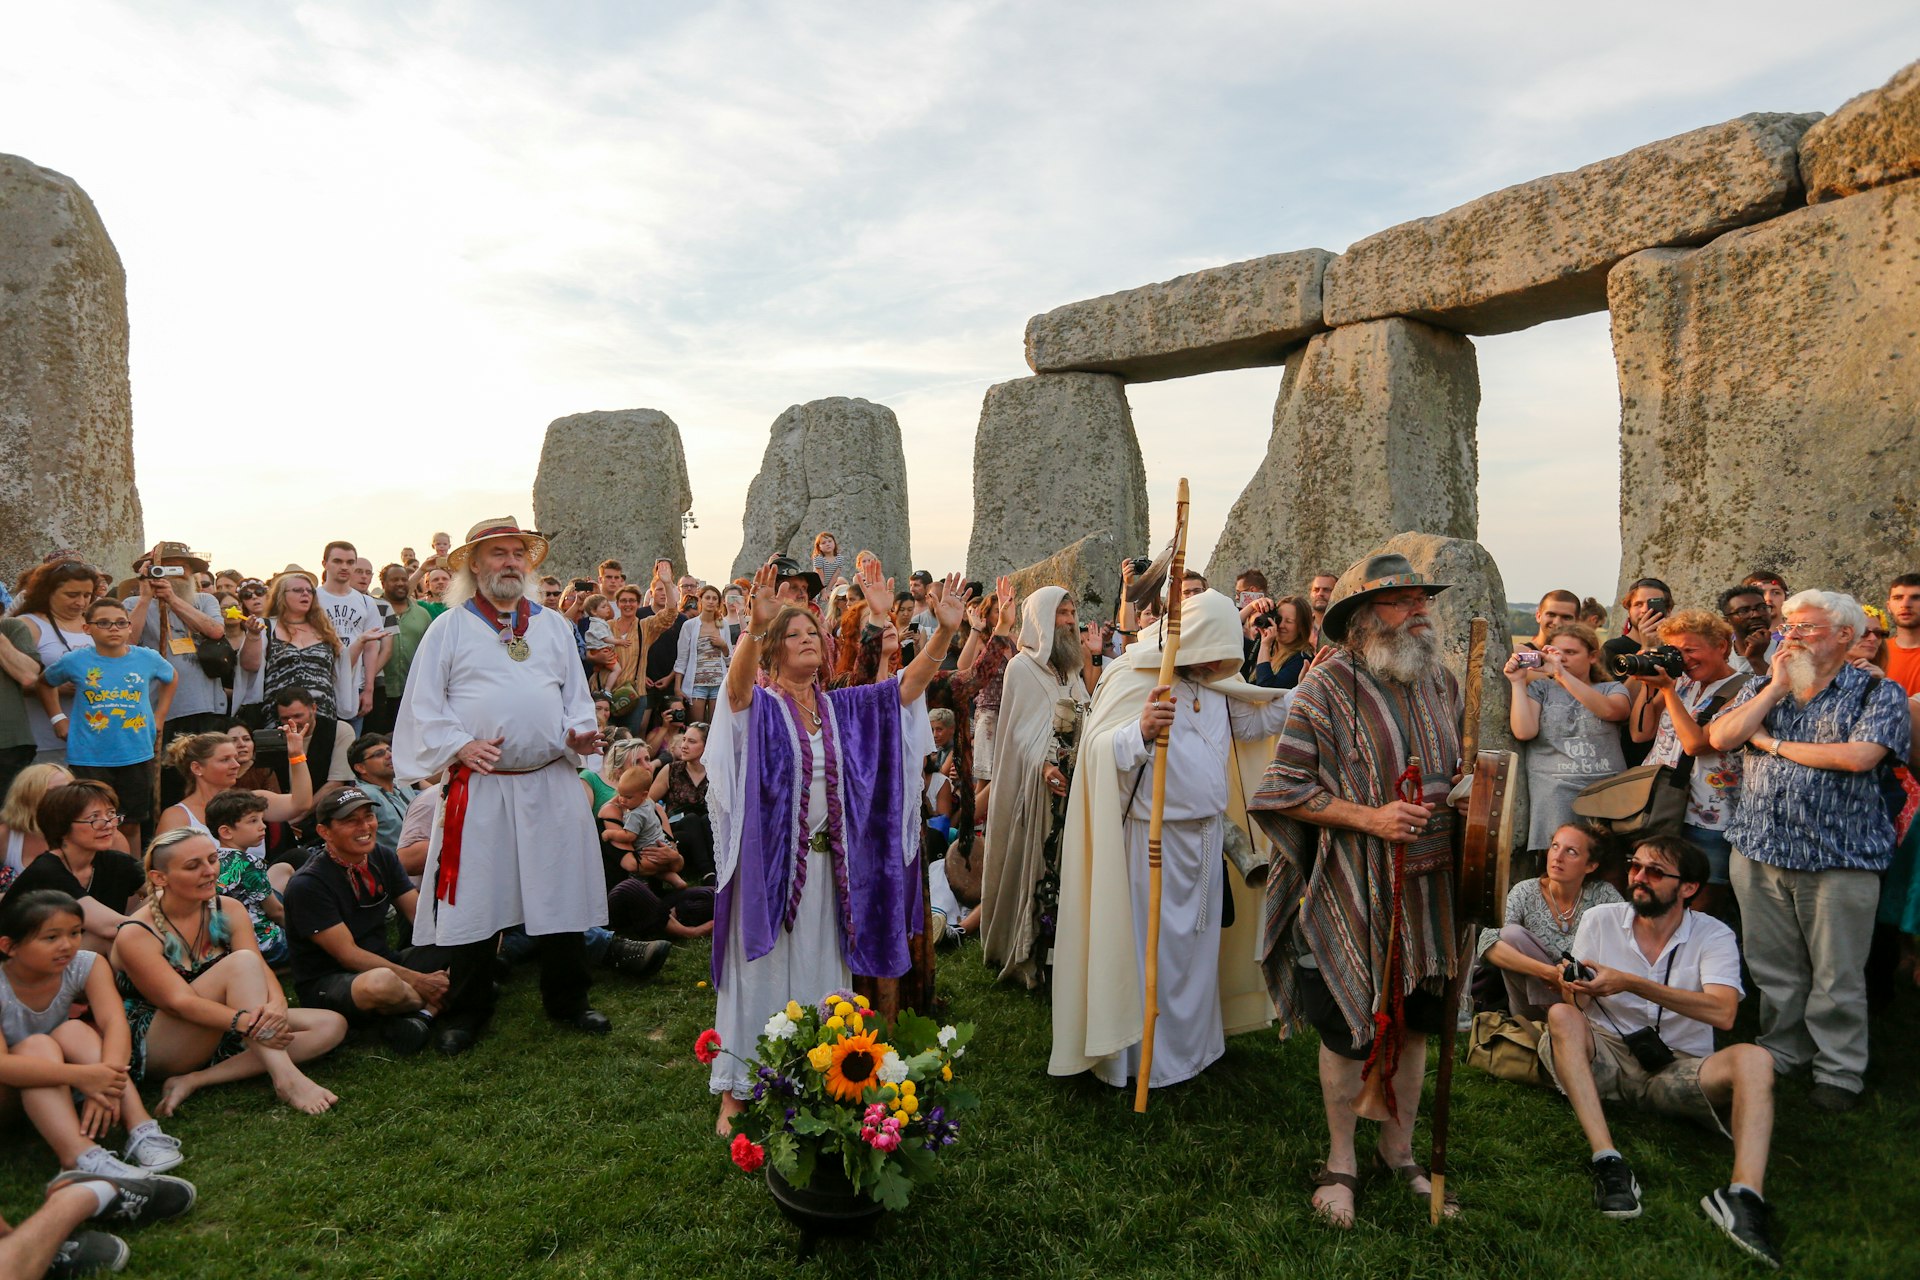 Revelers gather for the summer solstice at Stonehenge, Wiltshire, England, United Kingdom